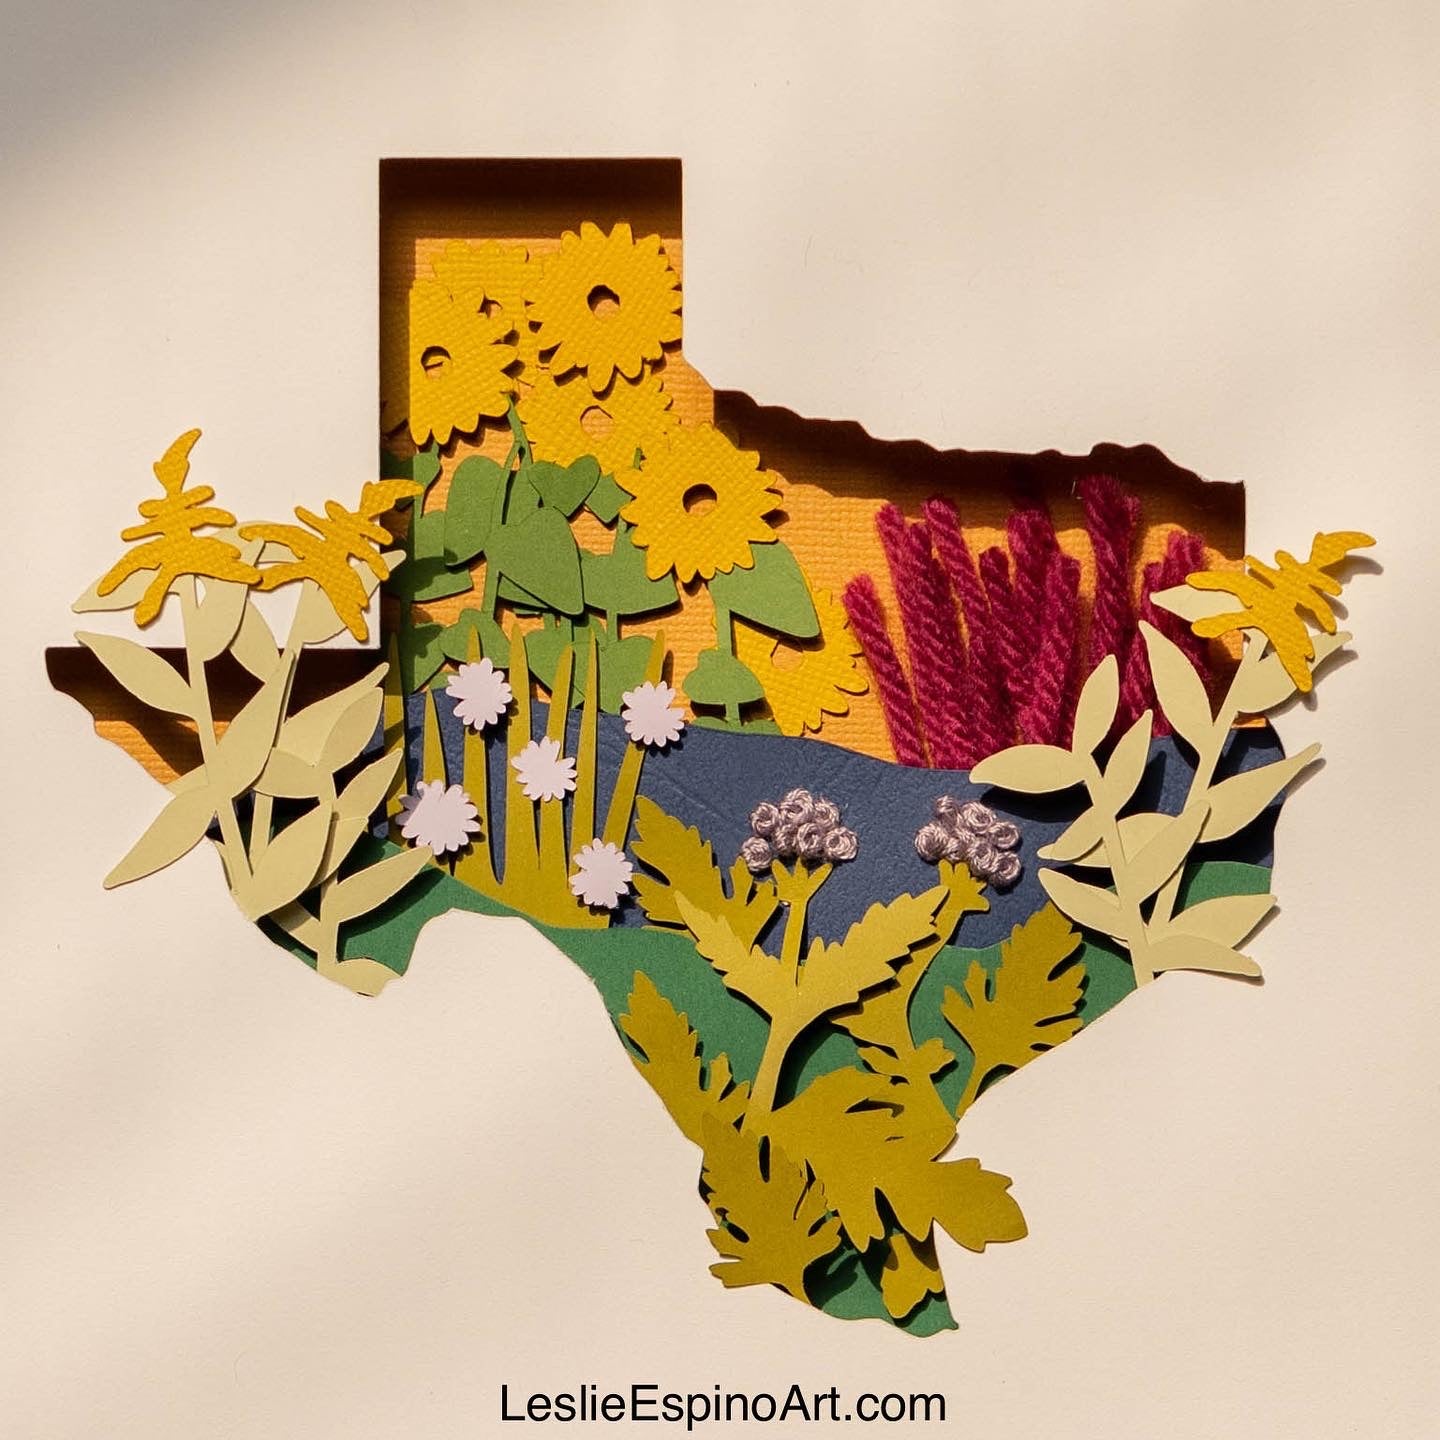 DIY Art Kit: Texas Wildflower